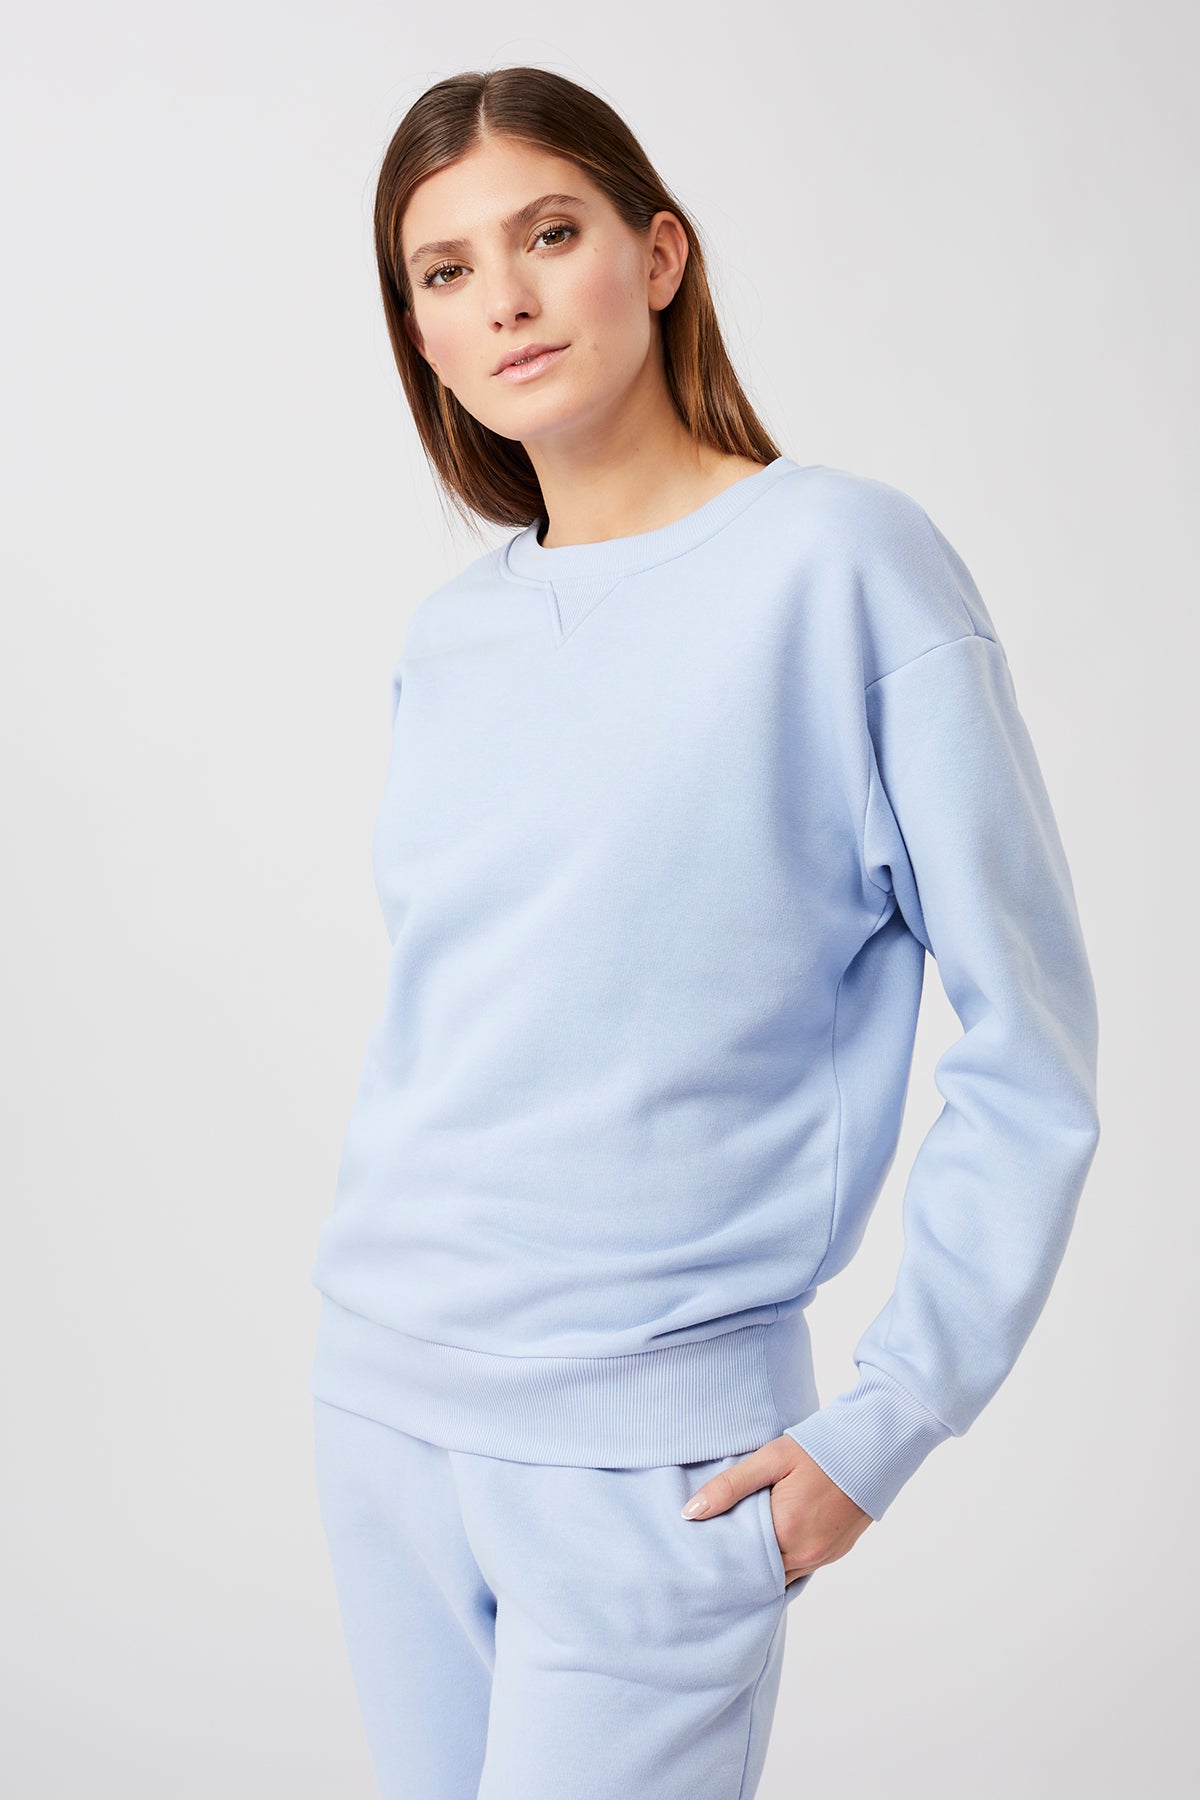 Mandala Yoga Pullover Blau Front - Natural Dye Sweater